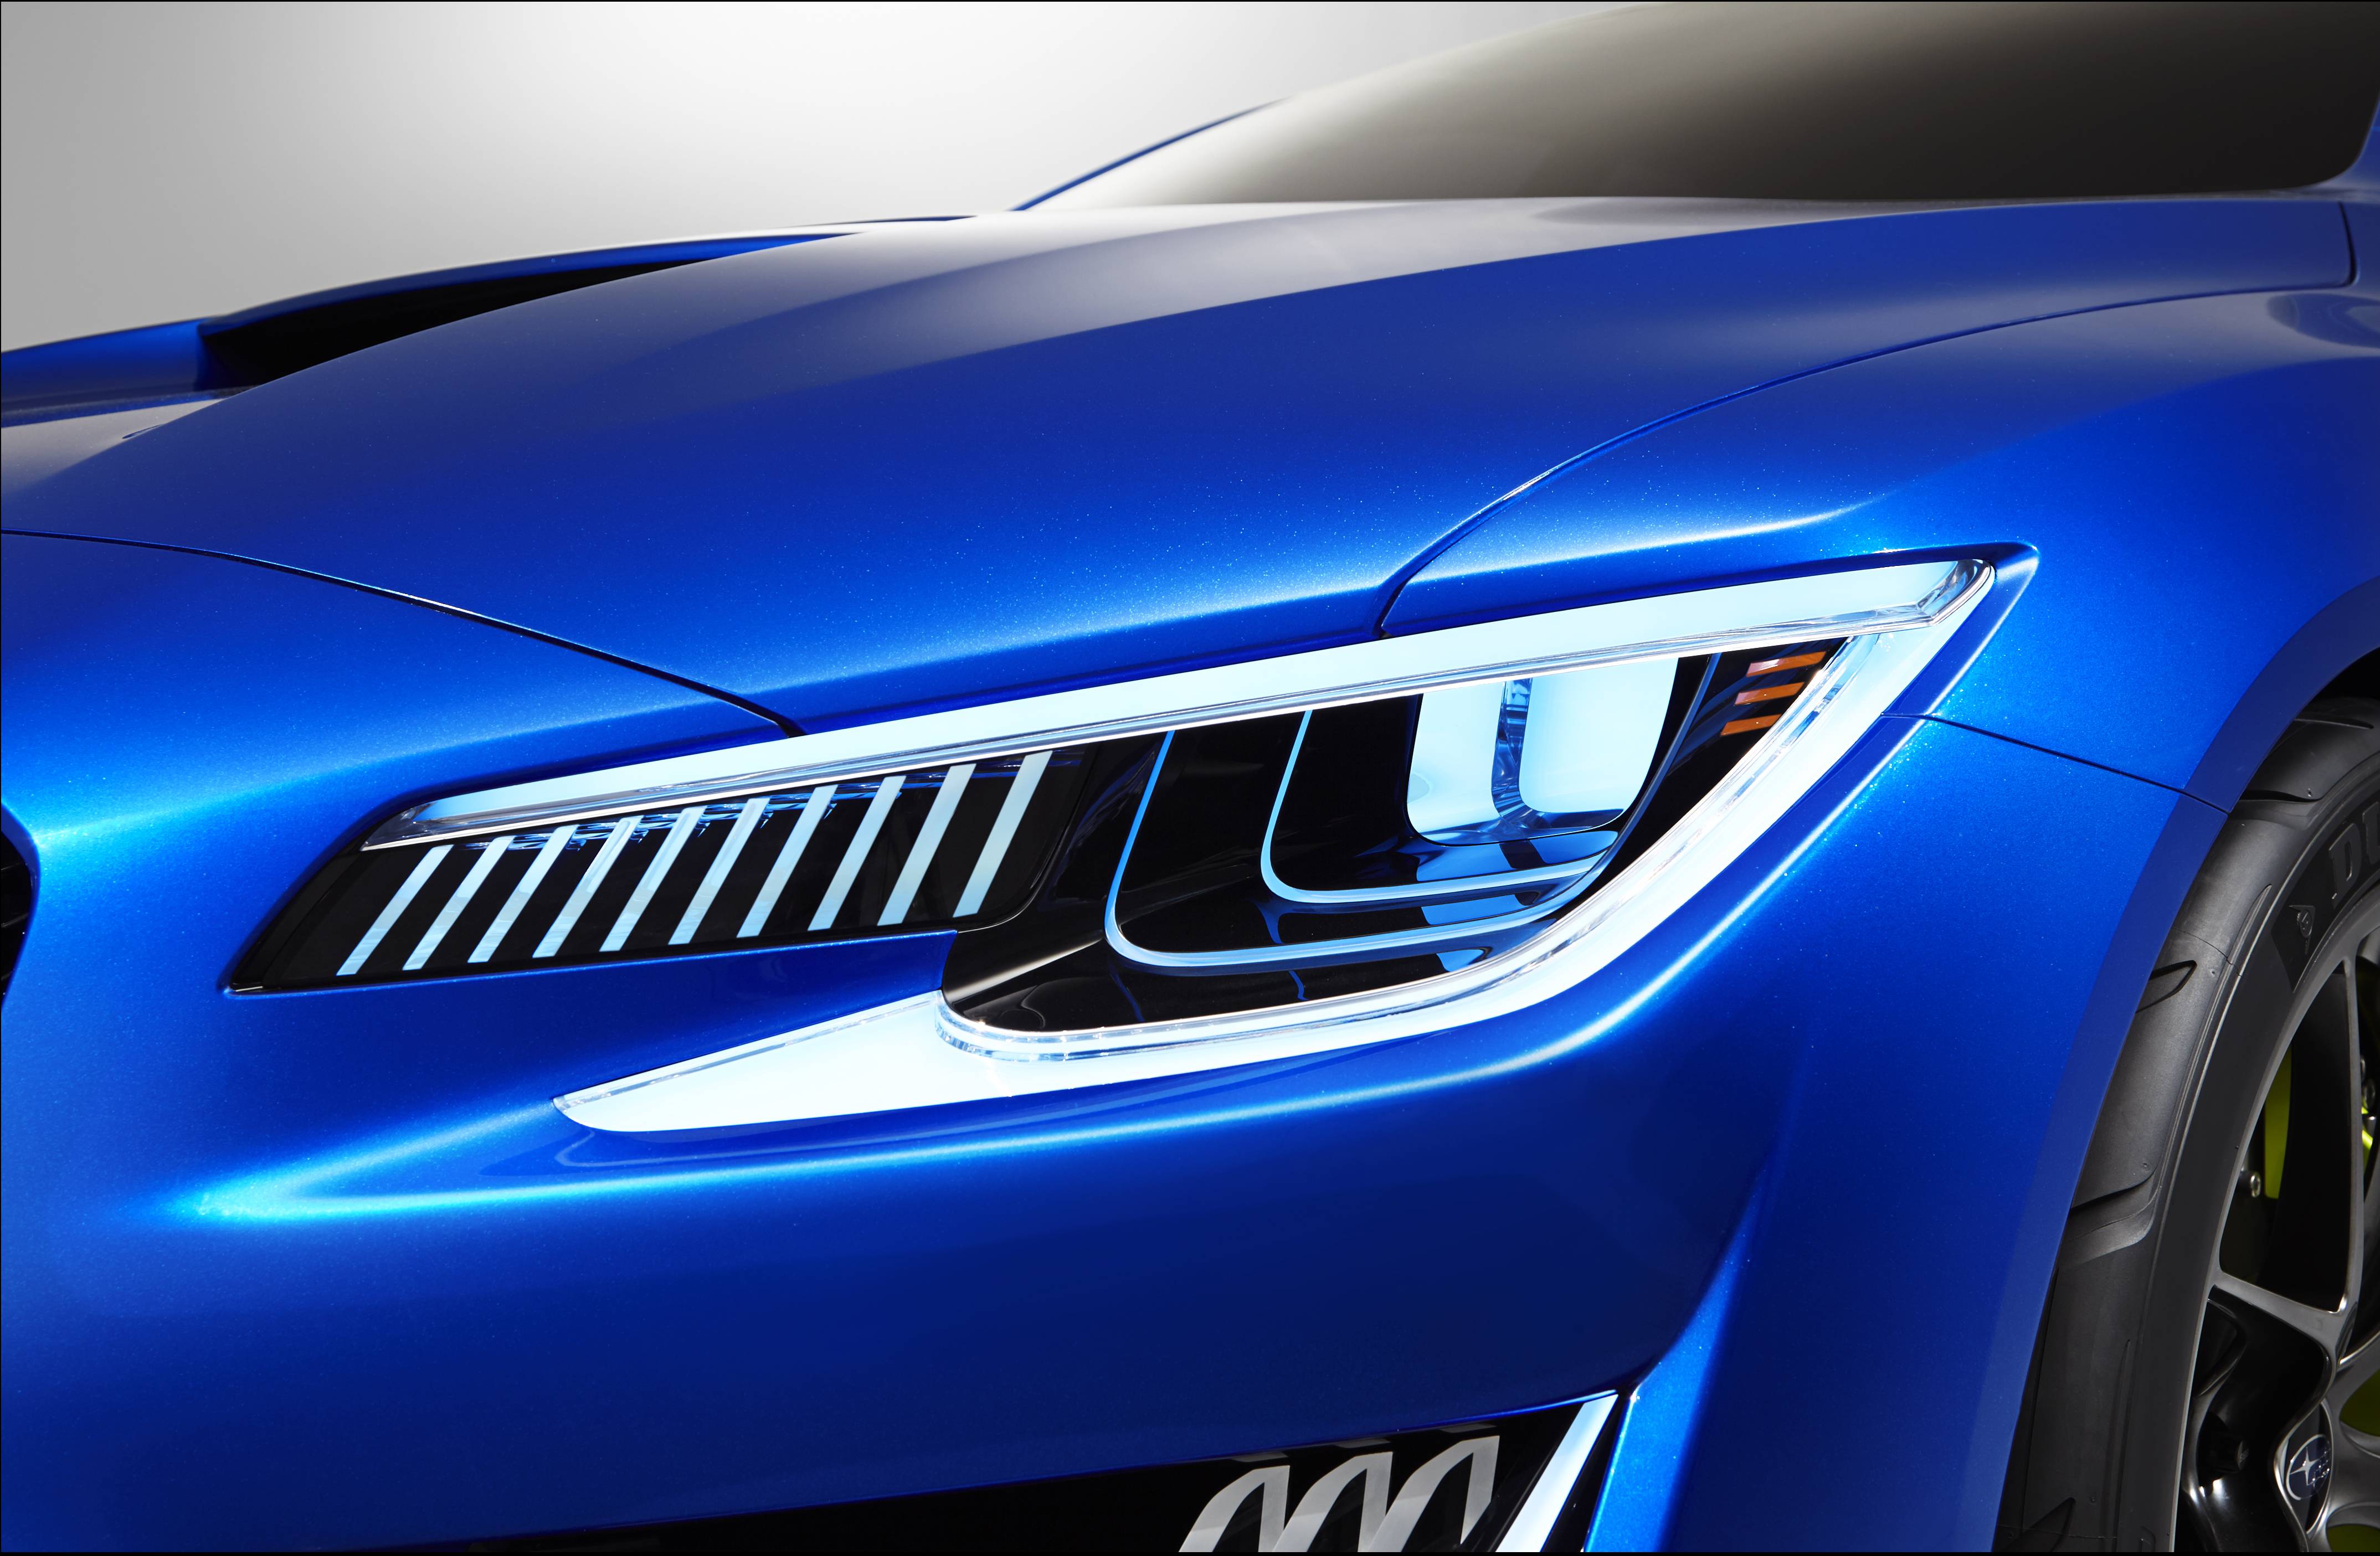 Subaru WRX Concept Headlight Exclusive HD Wallpaper